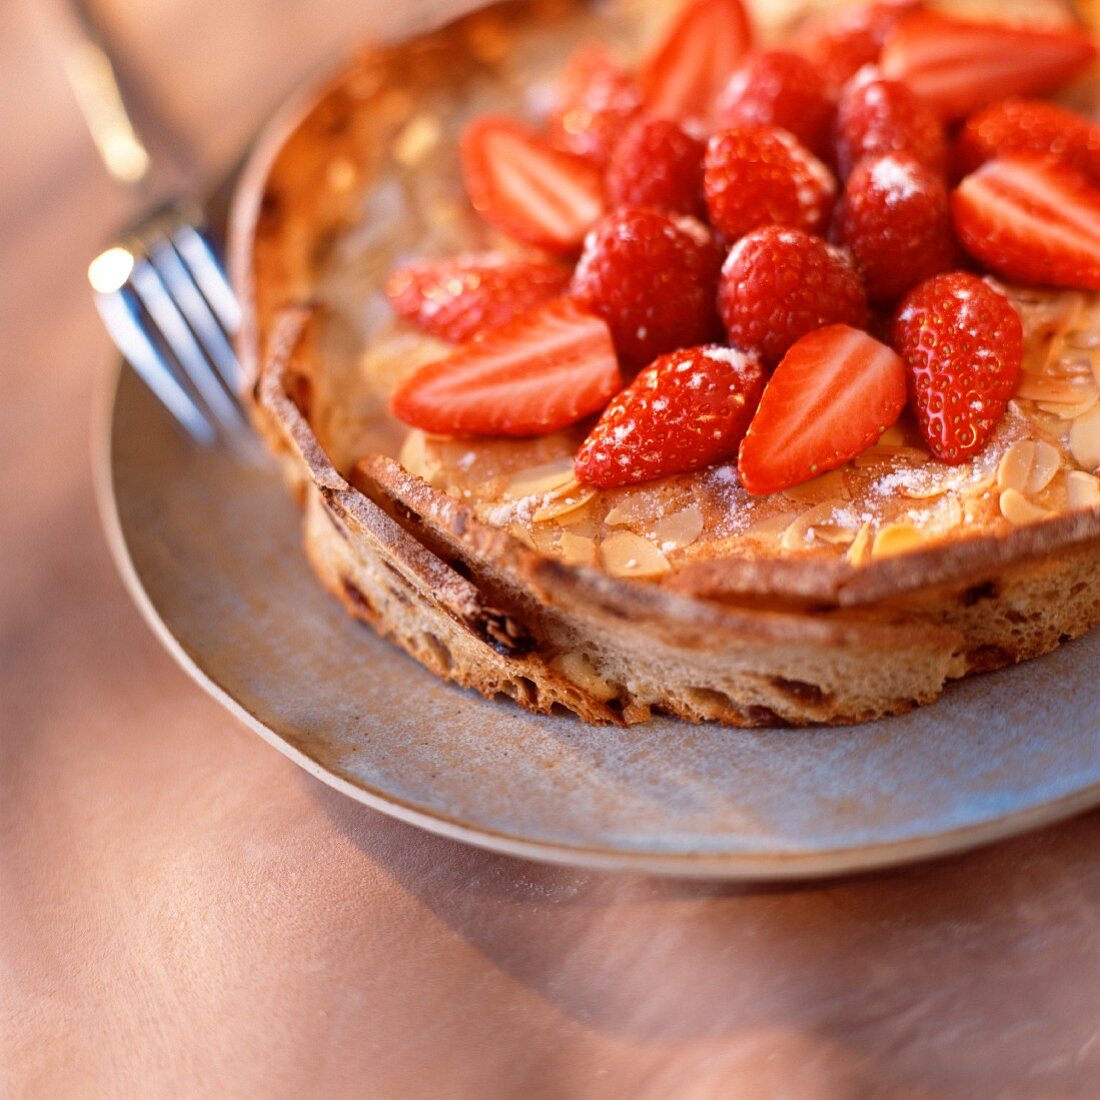 Almond tart with strawberries